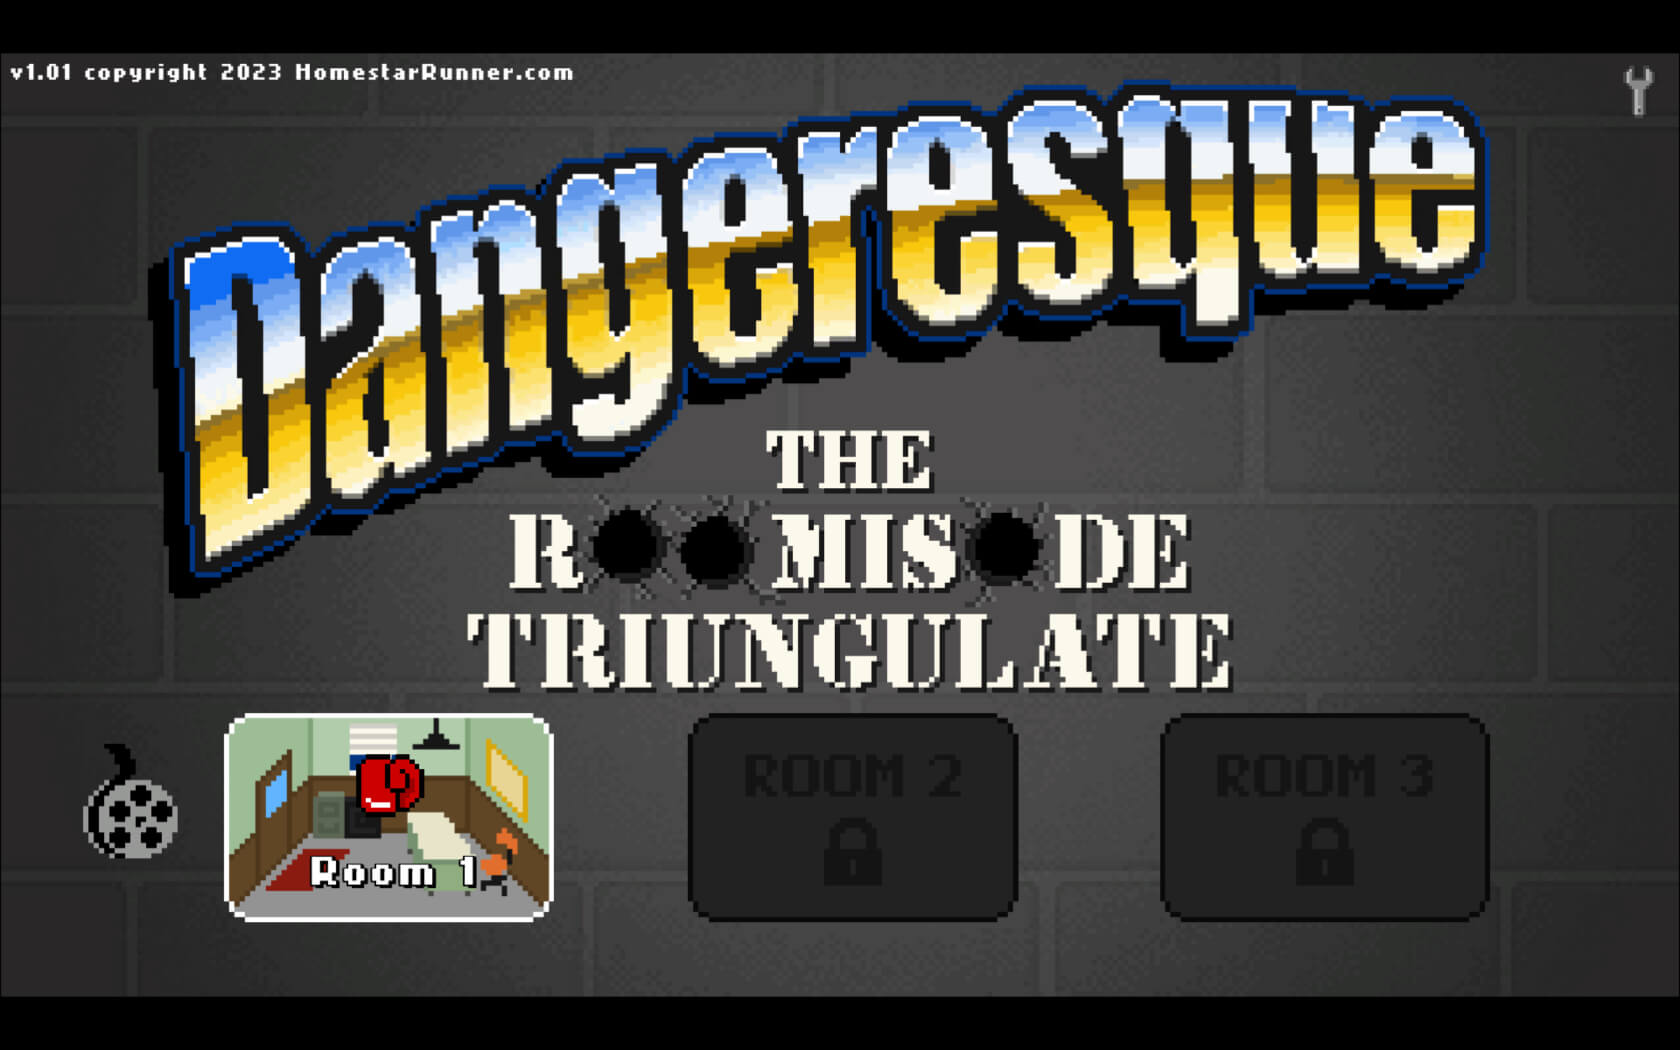 危险：三角房间剧集 for Mac Dangeresque: The Roomisode Triungulate v1.01 英文原生版 苹果电脑